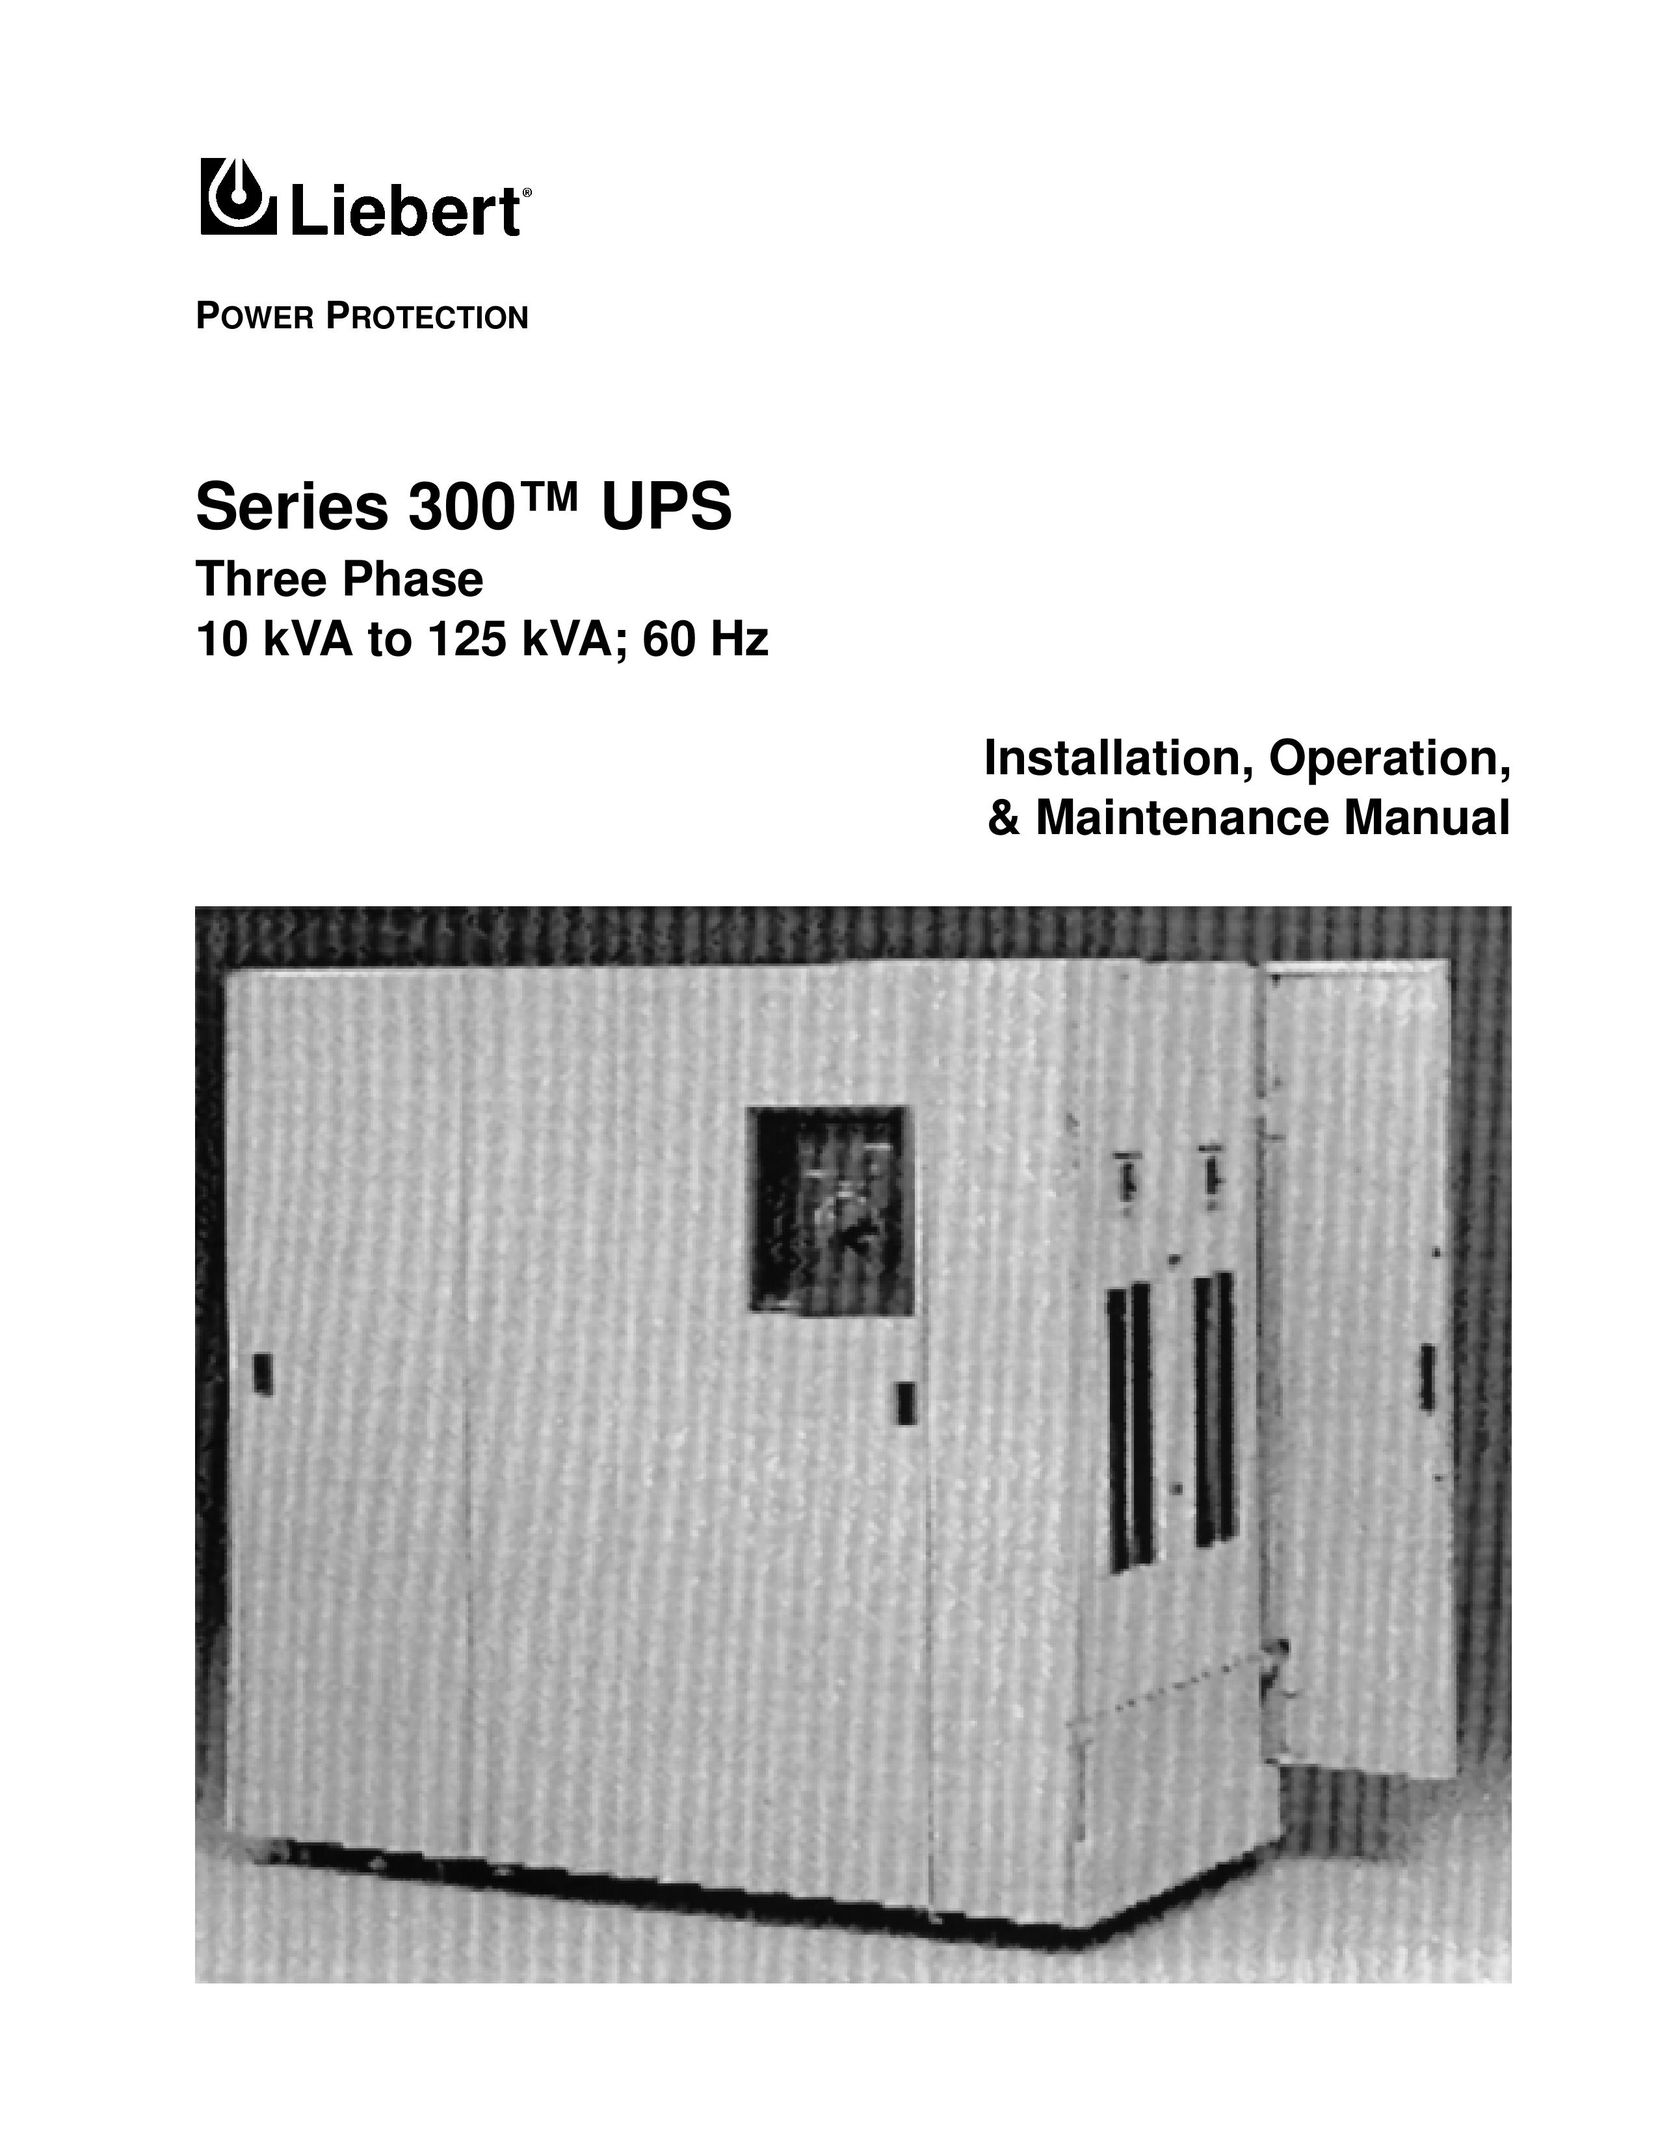 Liebert SERIES 300 UPS Surge Protector User Manual